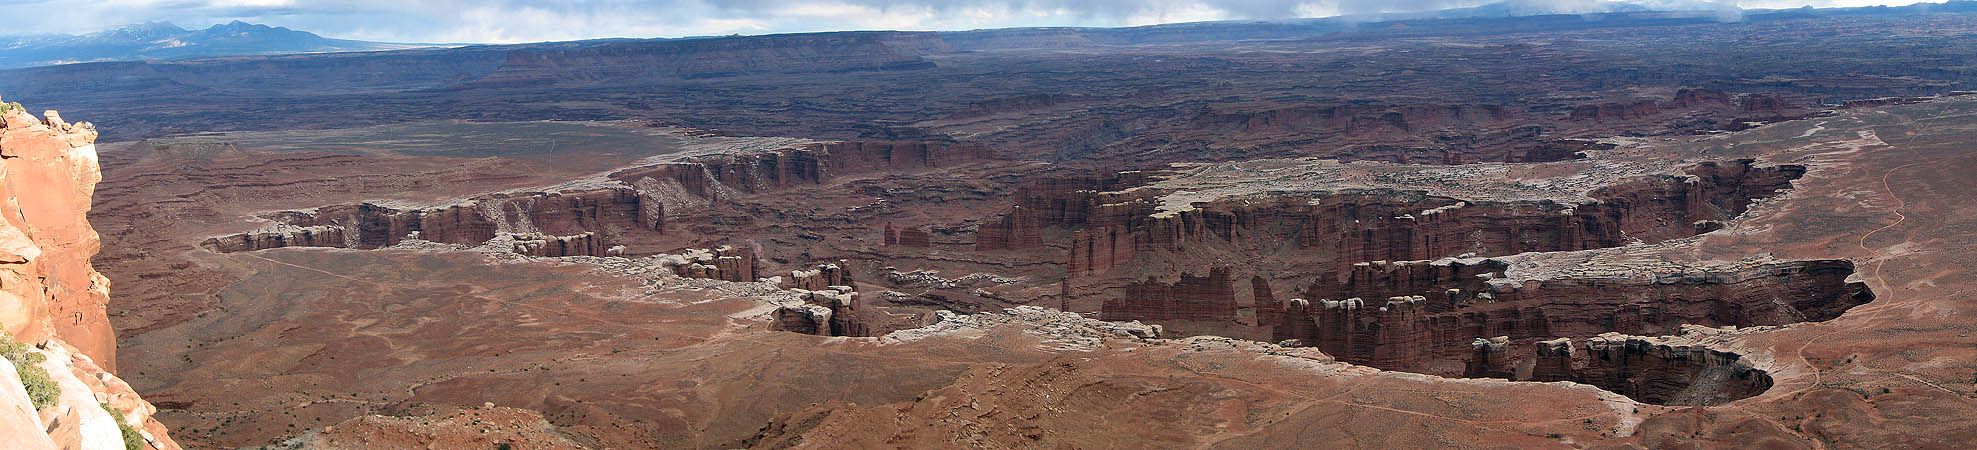 Moab 2005: Panoramic White Rim